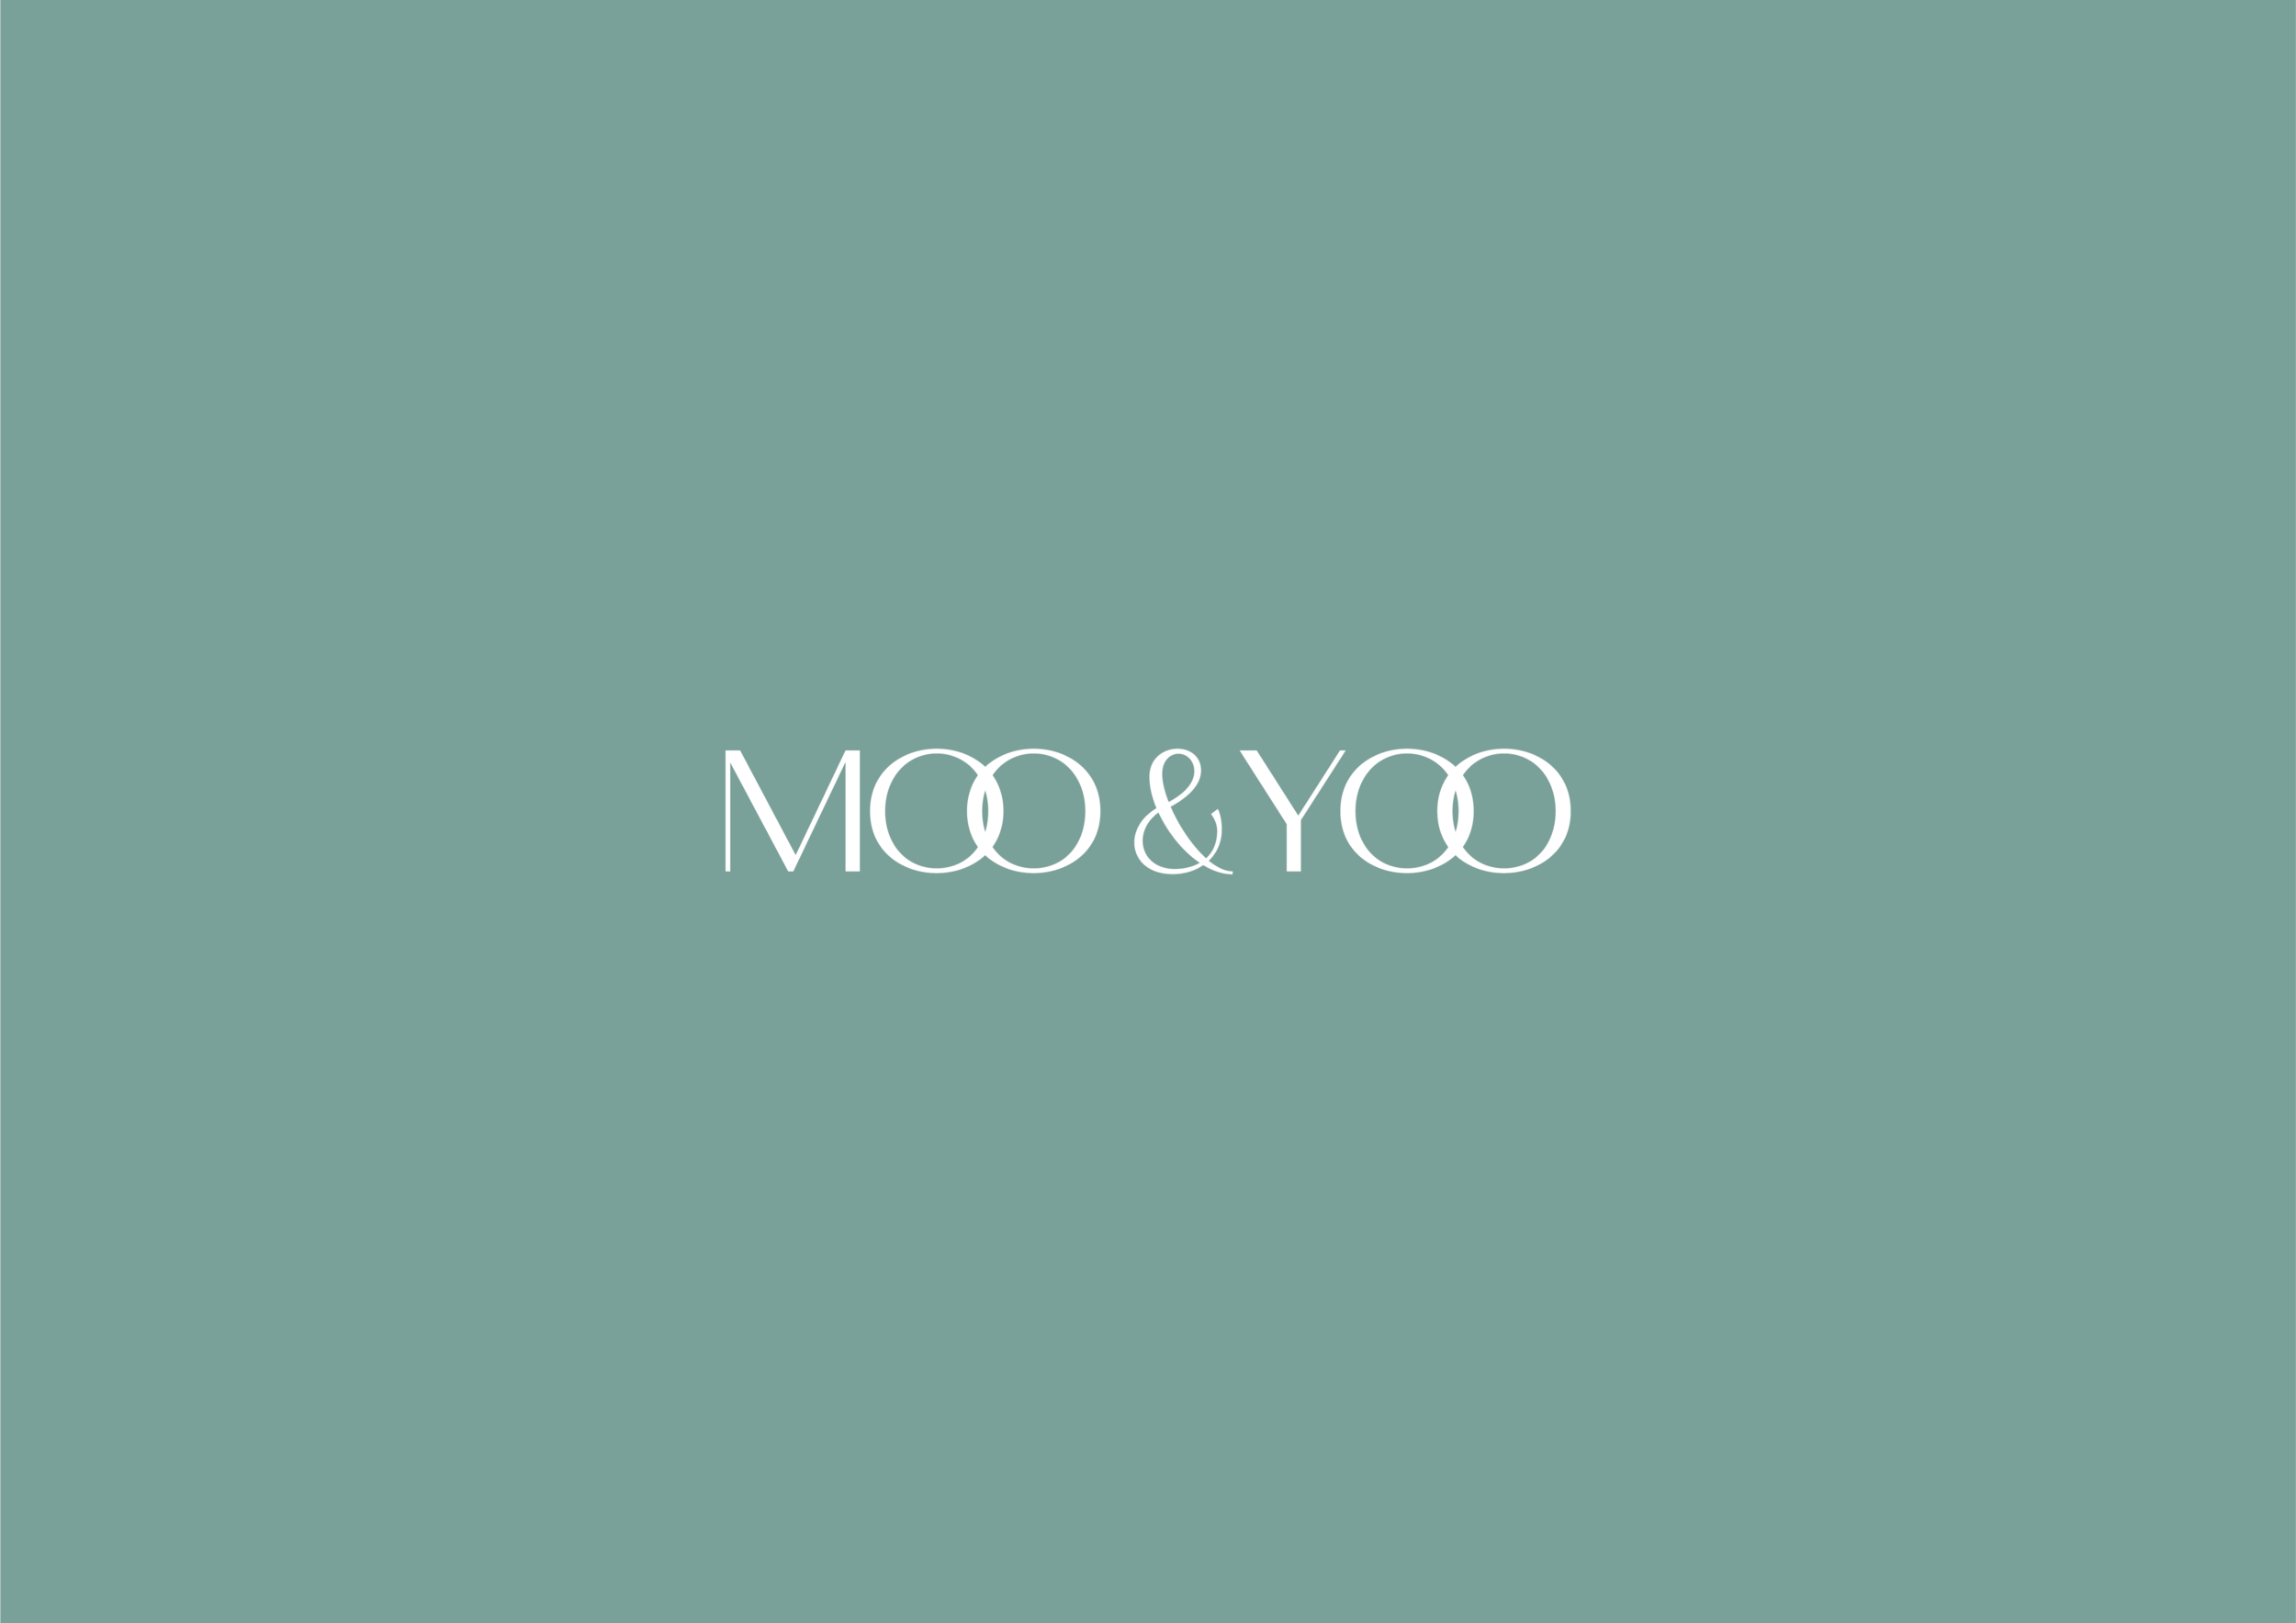 Freelance-graphic-designer-Moo &amp; Yoo company font logo with light green background